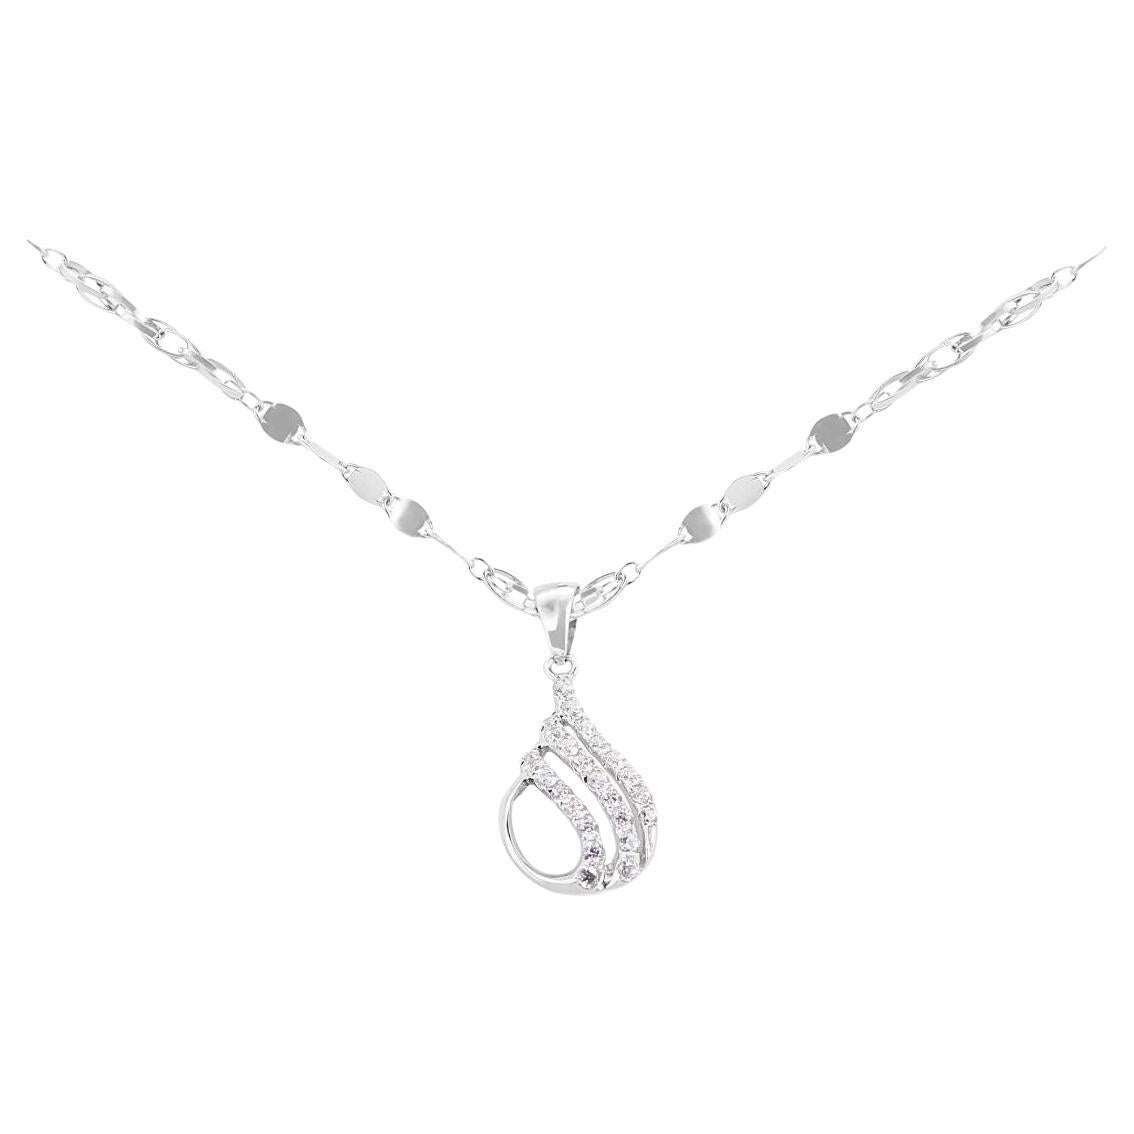 Elegant 0.25ct Tear Drop Diamond Necklace set in 18K White Gold